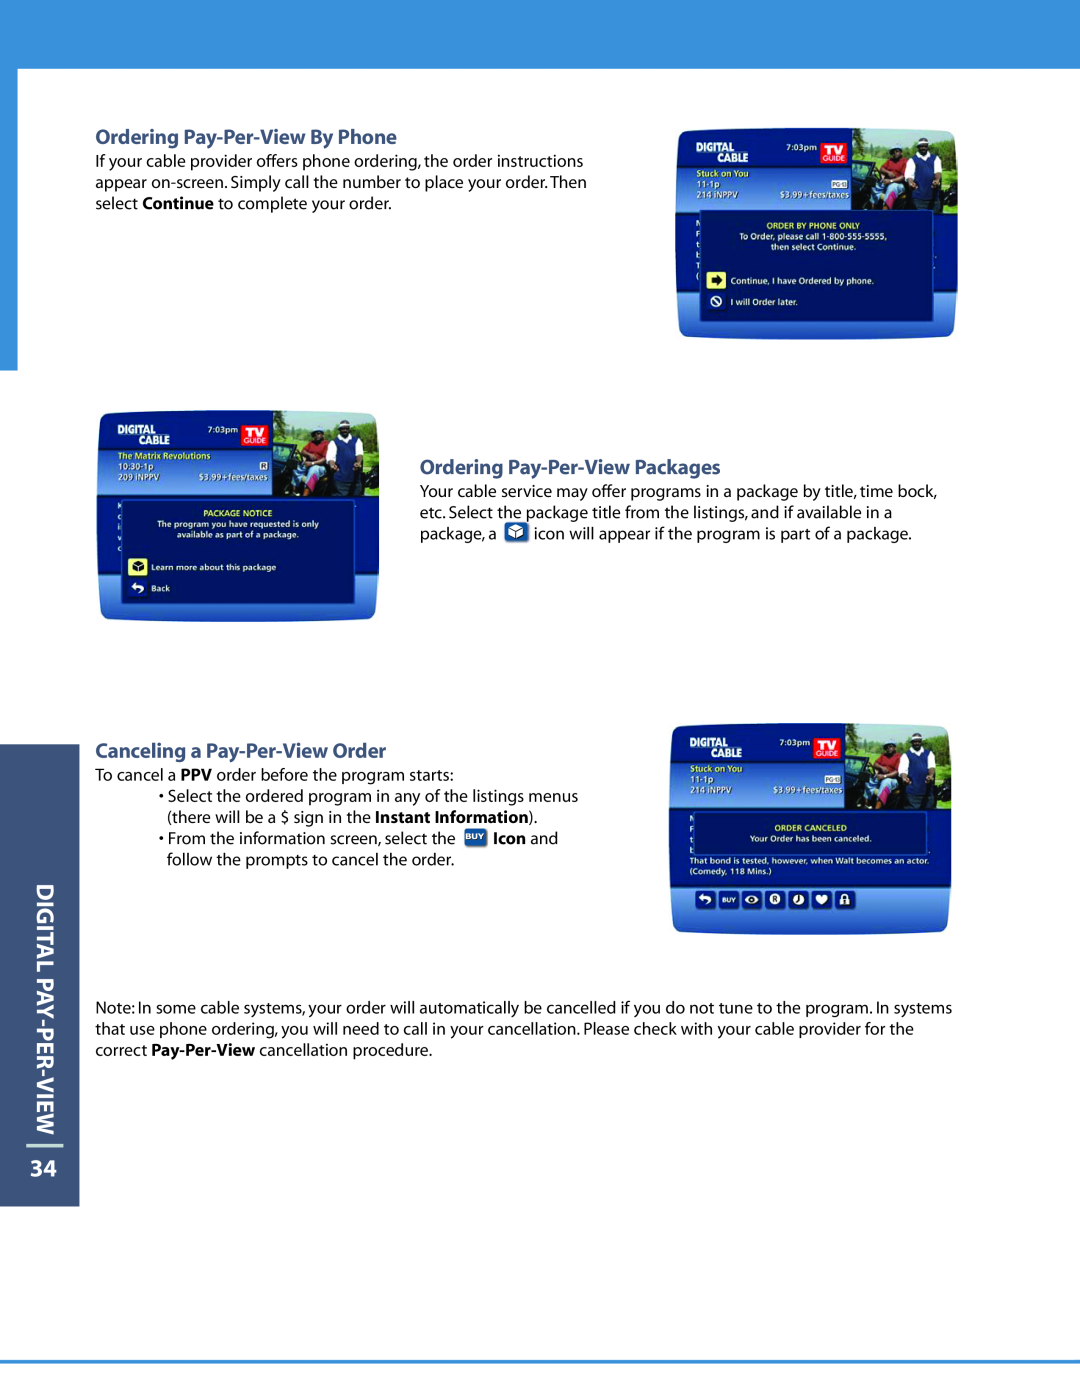 Motorola DCT6208 manual Digital Pay-Per-View, Ordering Pay-Per-ViewBy Phone, Ordering Pay-Per-ViewPackages 